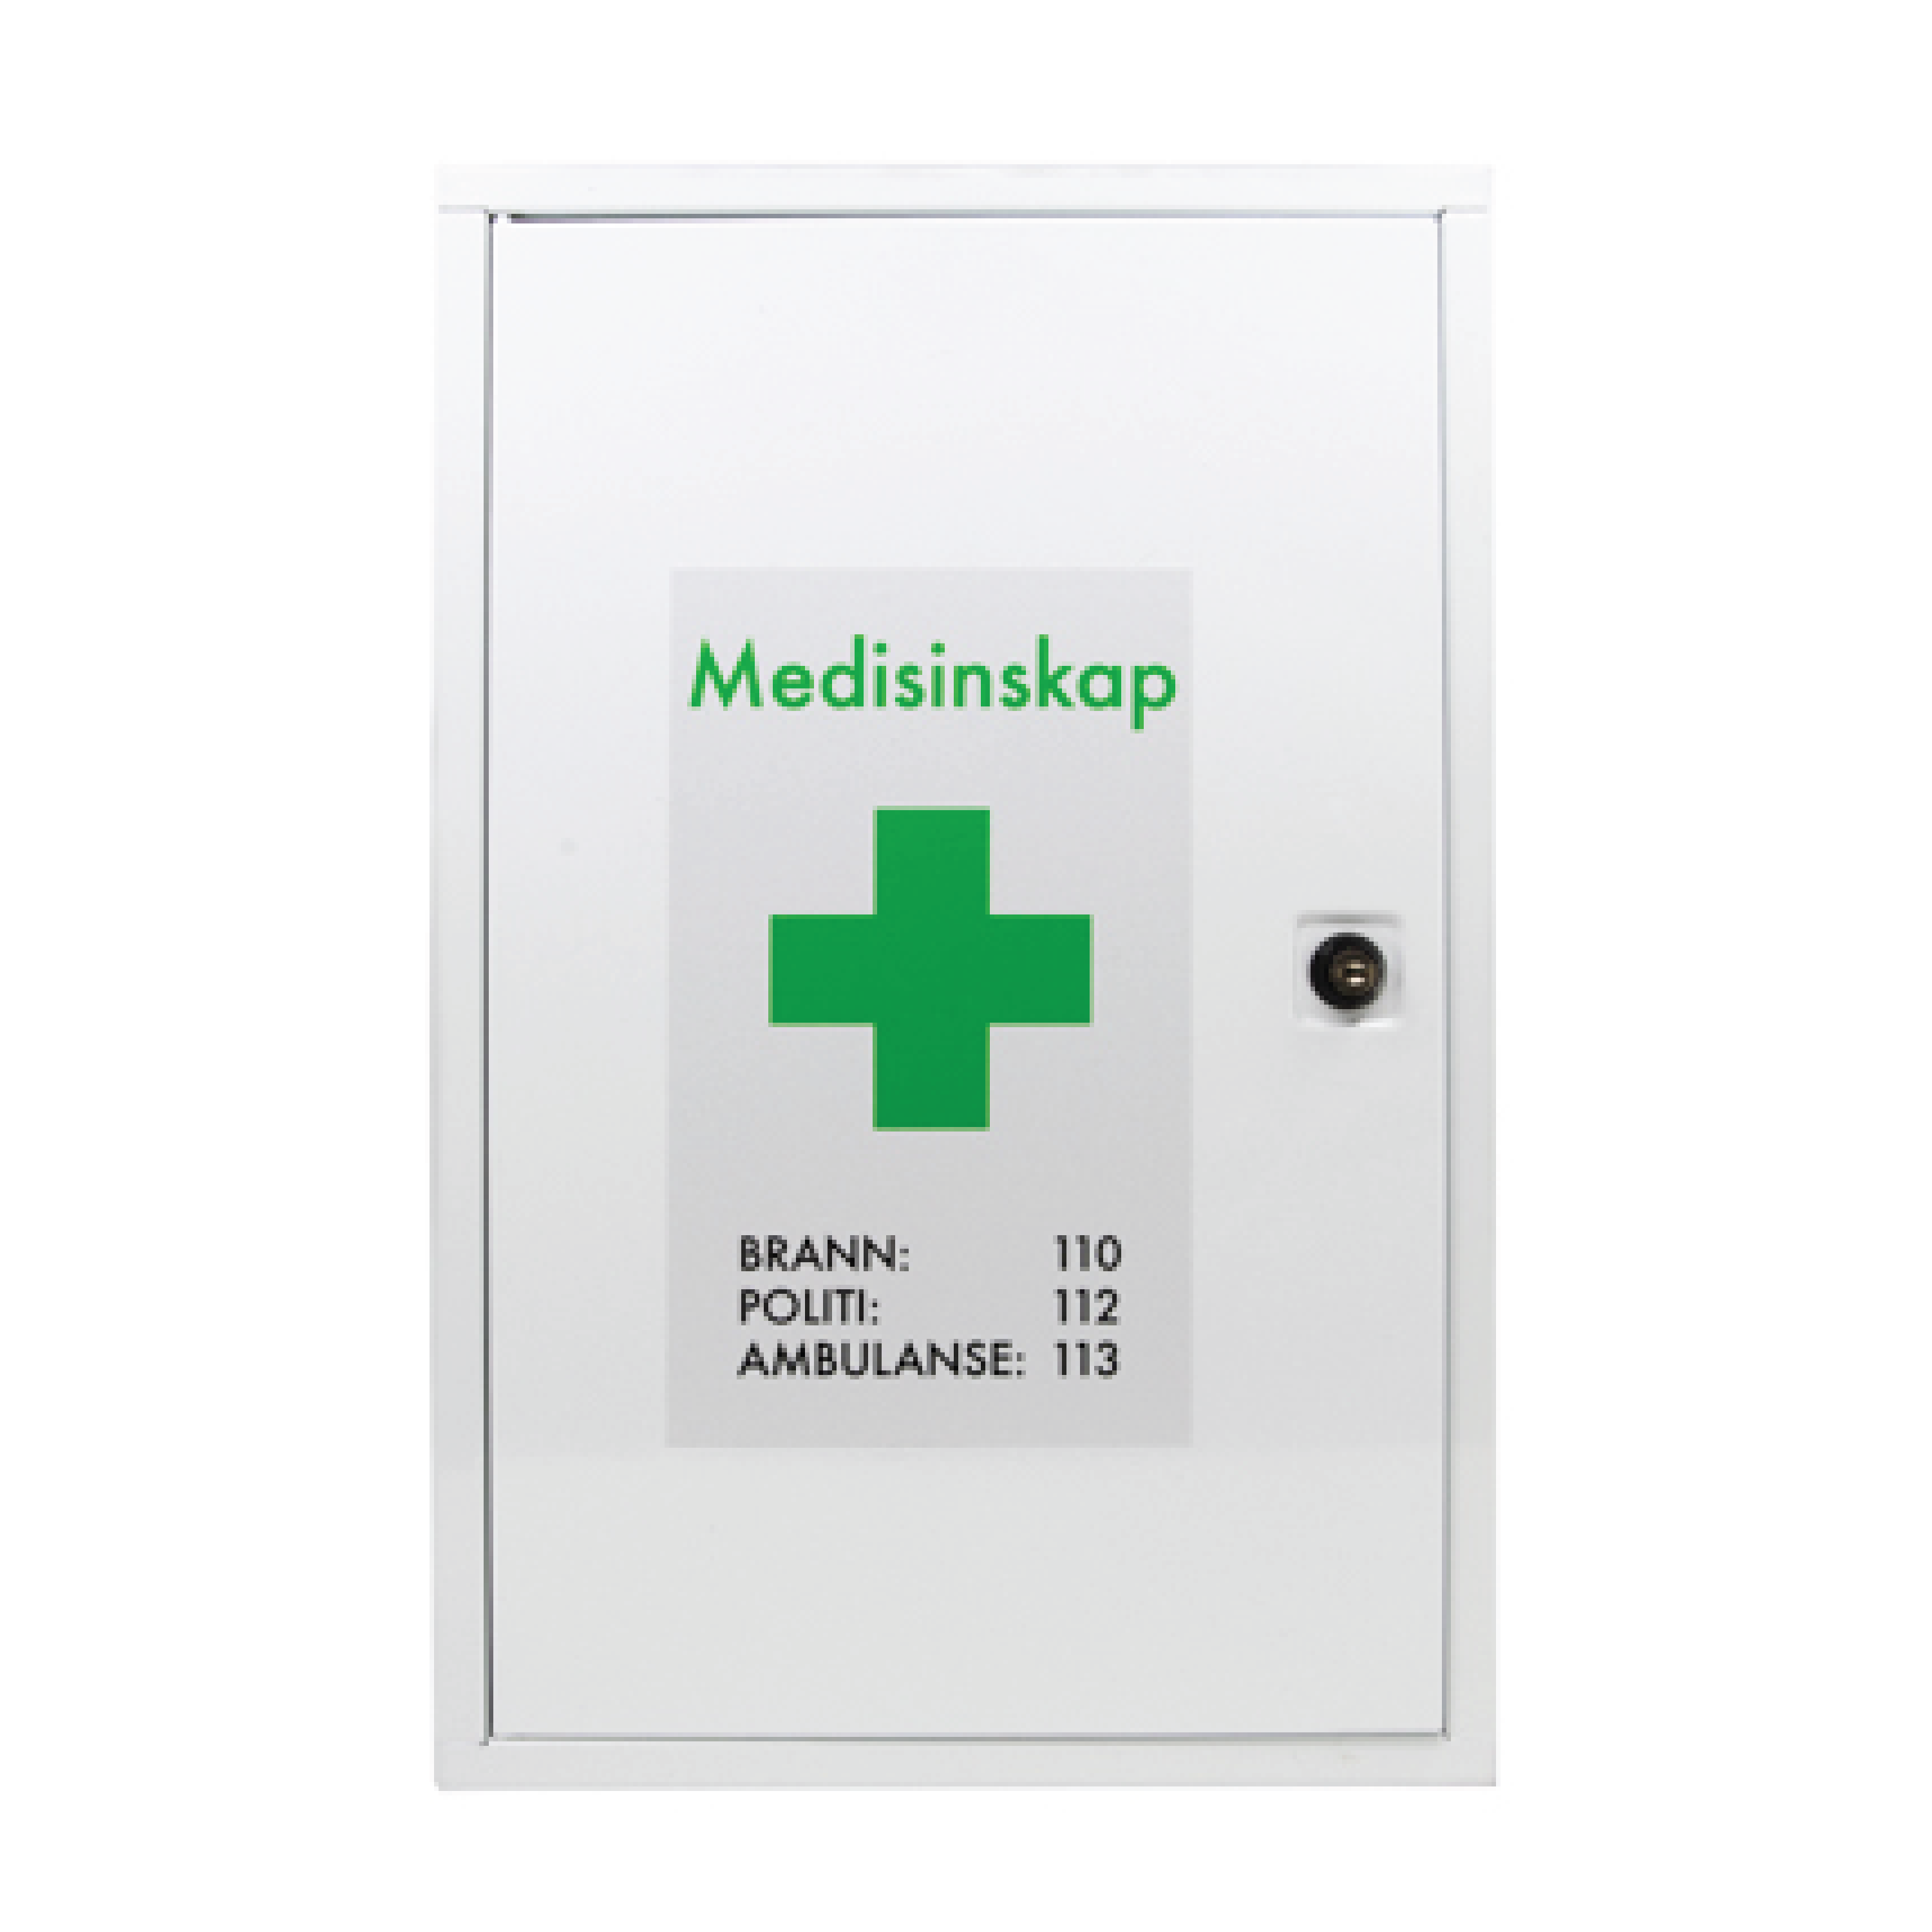 Mediq Medisinskap, 1 stk.